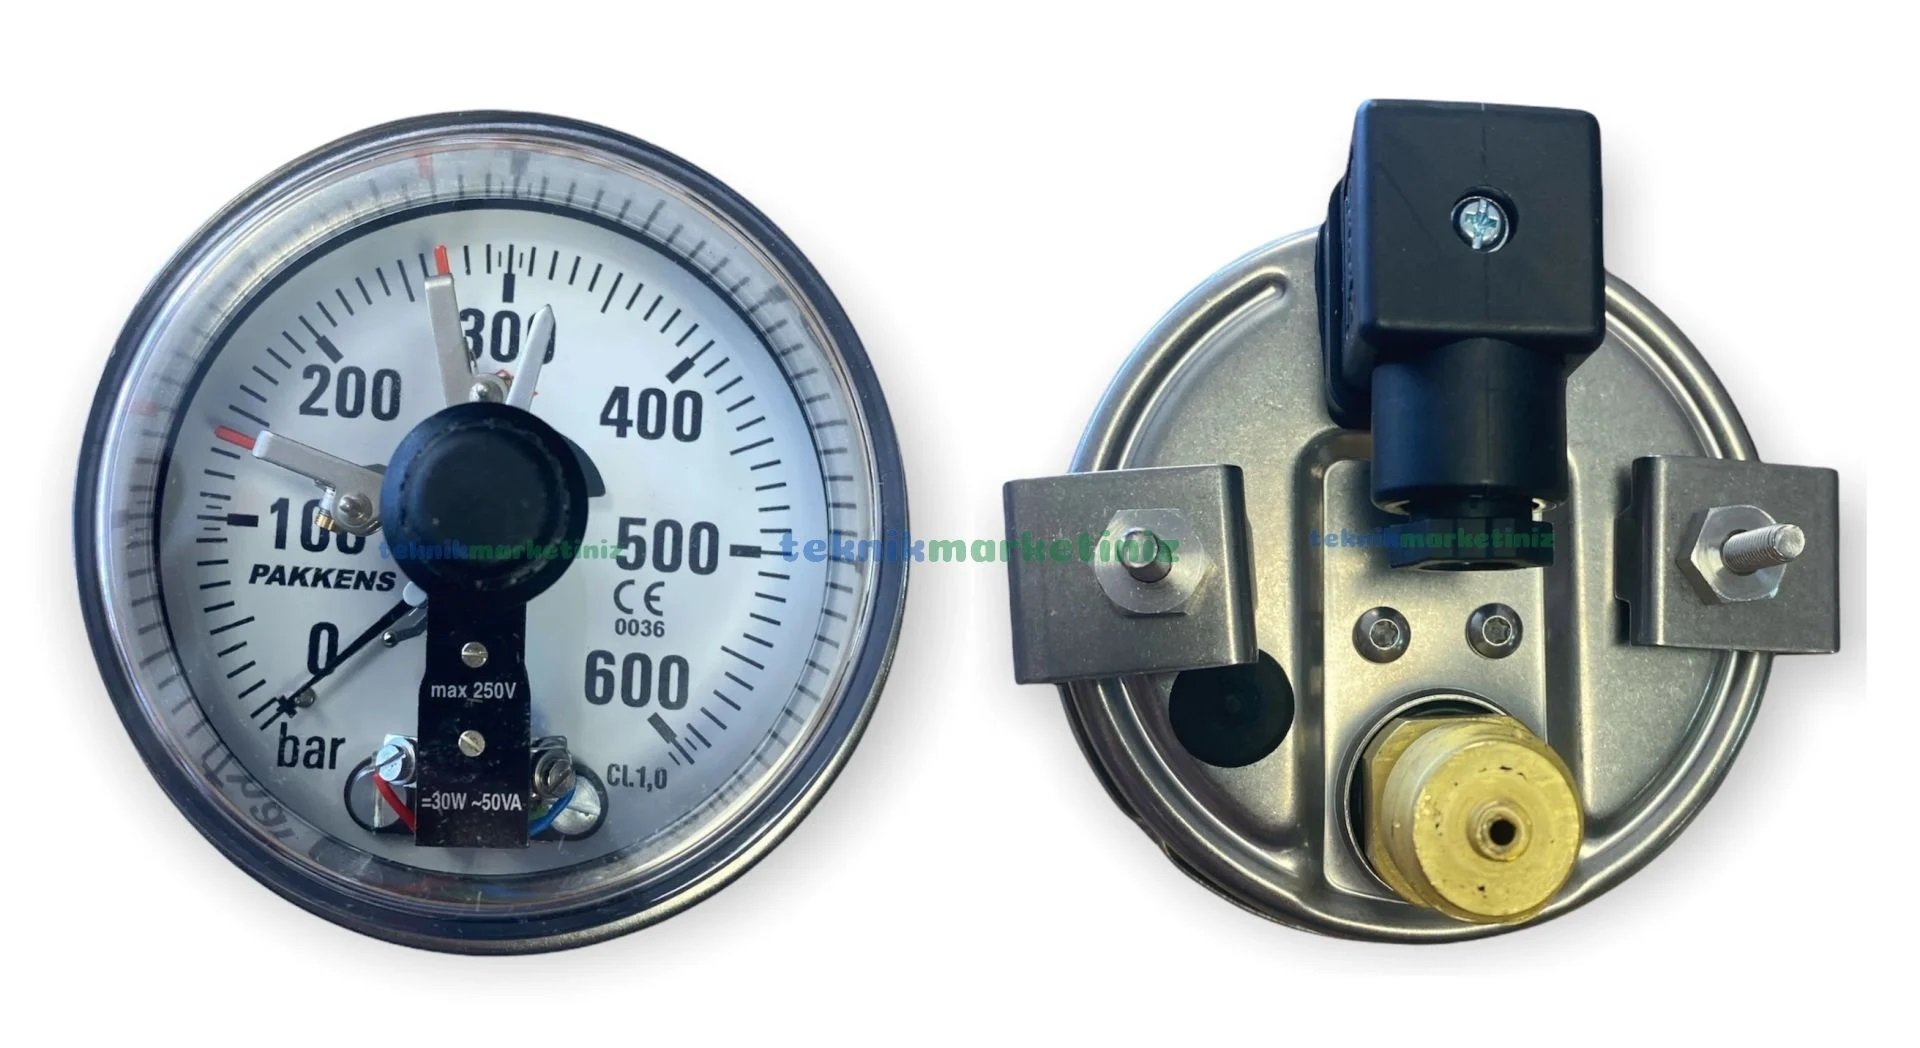 pakkens mk100 çift kontaklı panotip arka çıkış manometre basınç ölçer temsili resmi 10011075